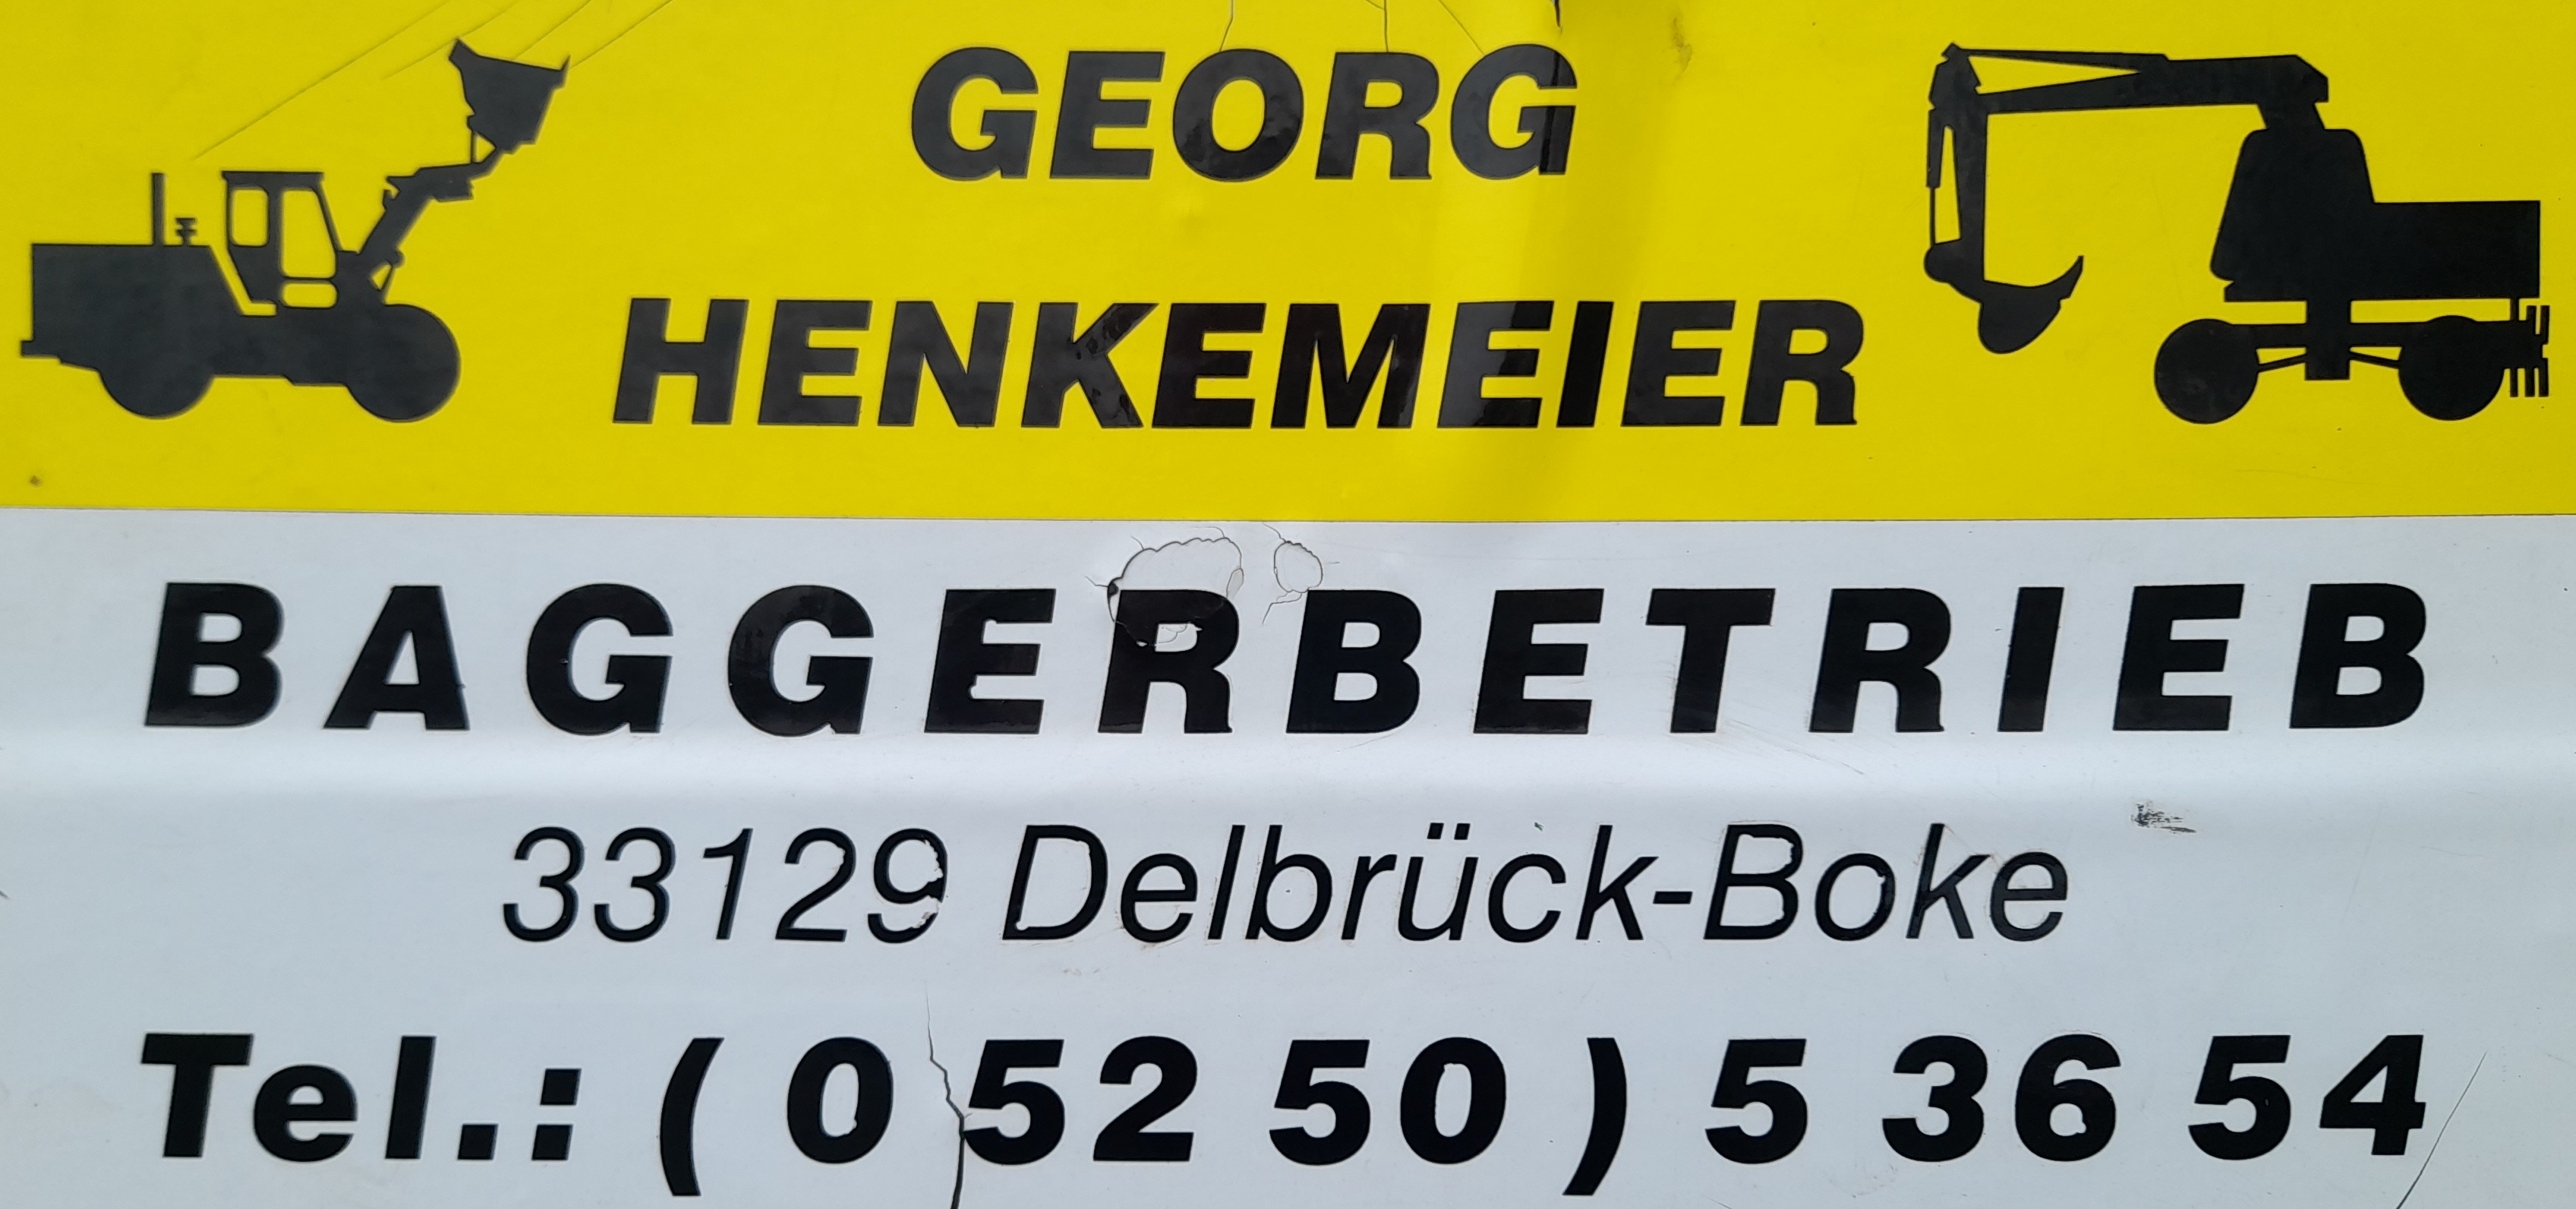 Baggerbetrieb Georg Henkemeier